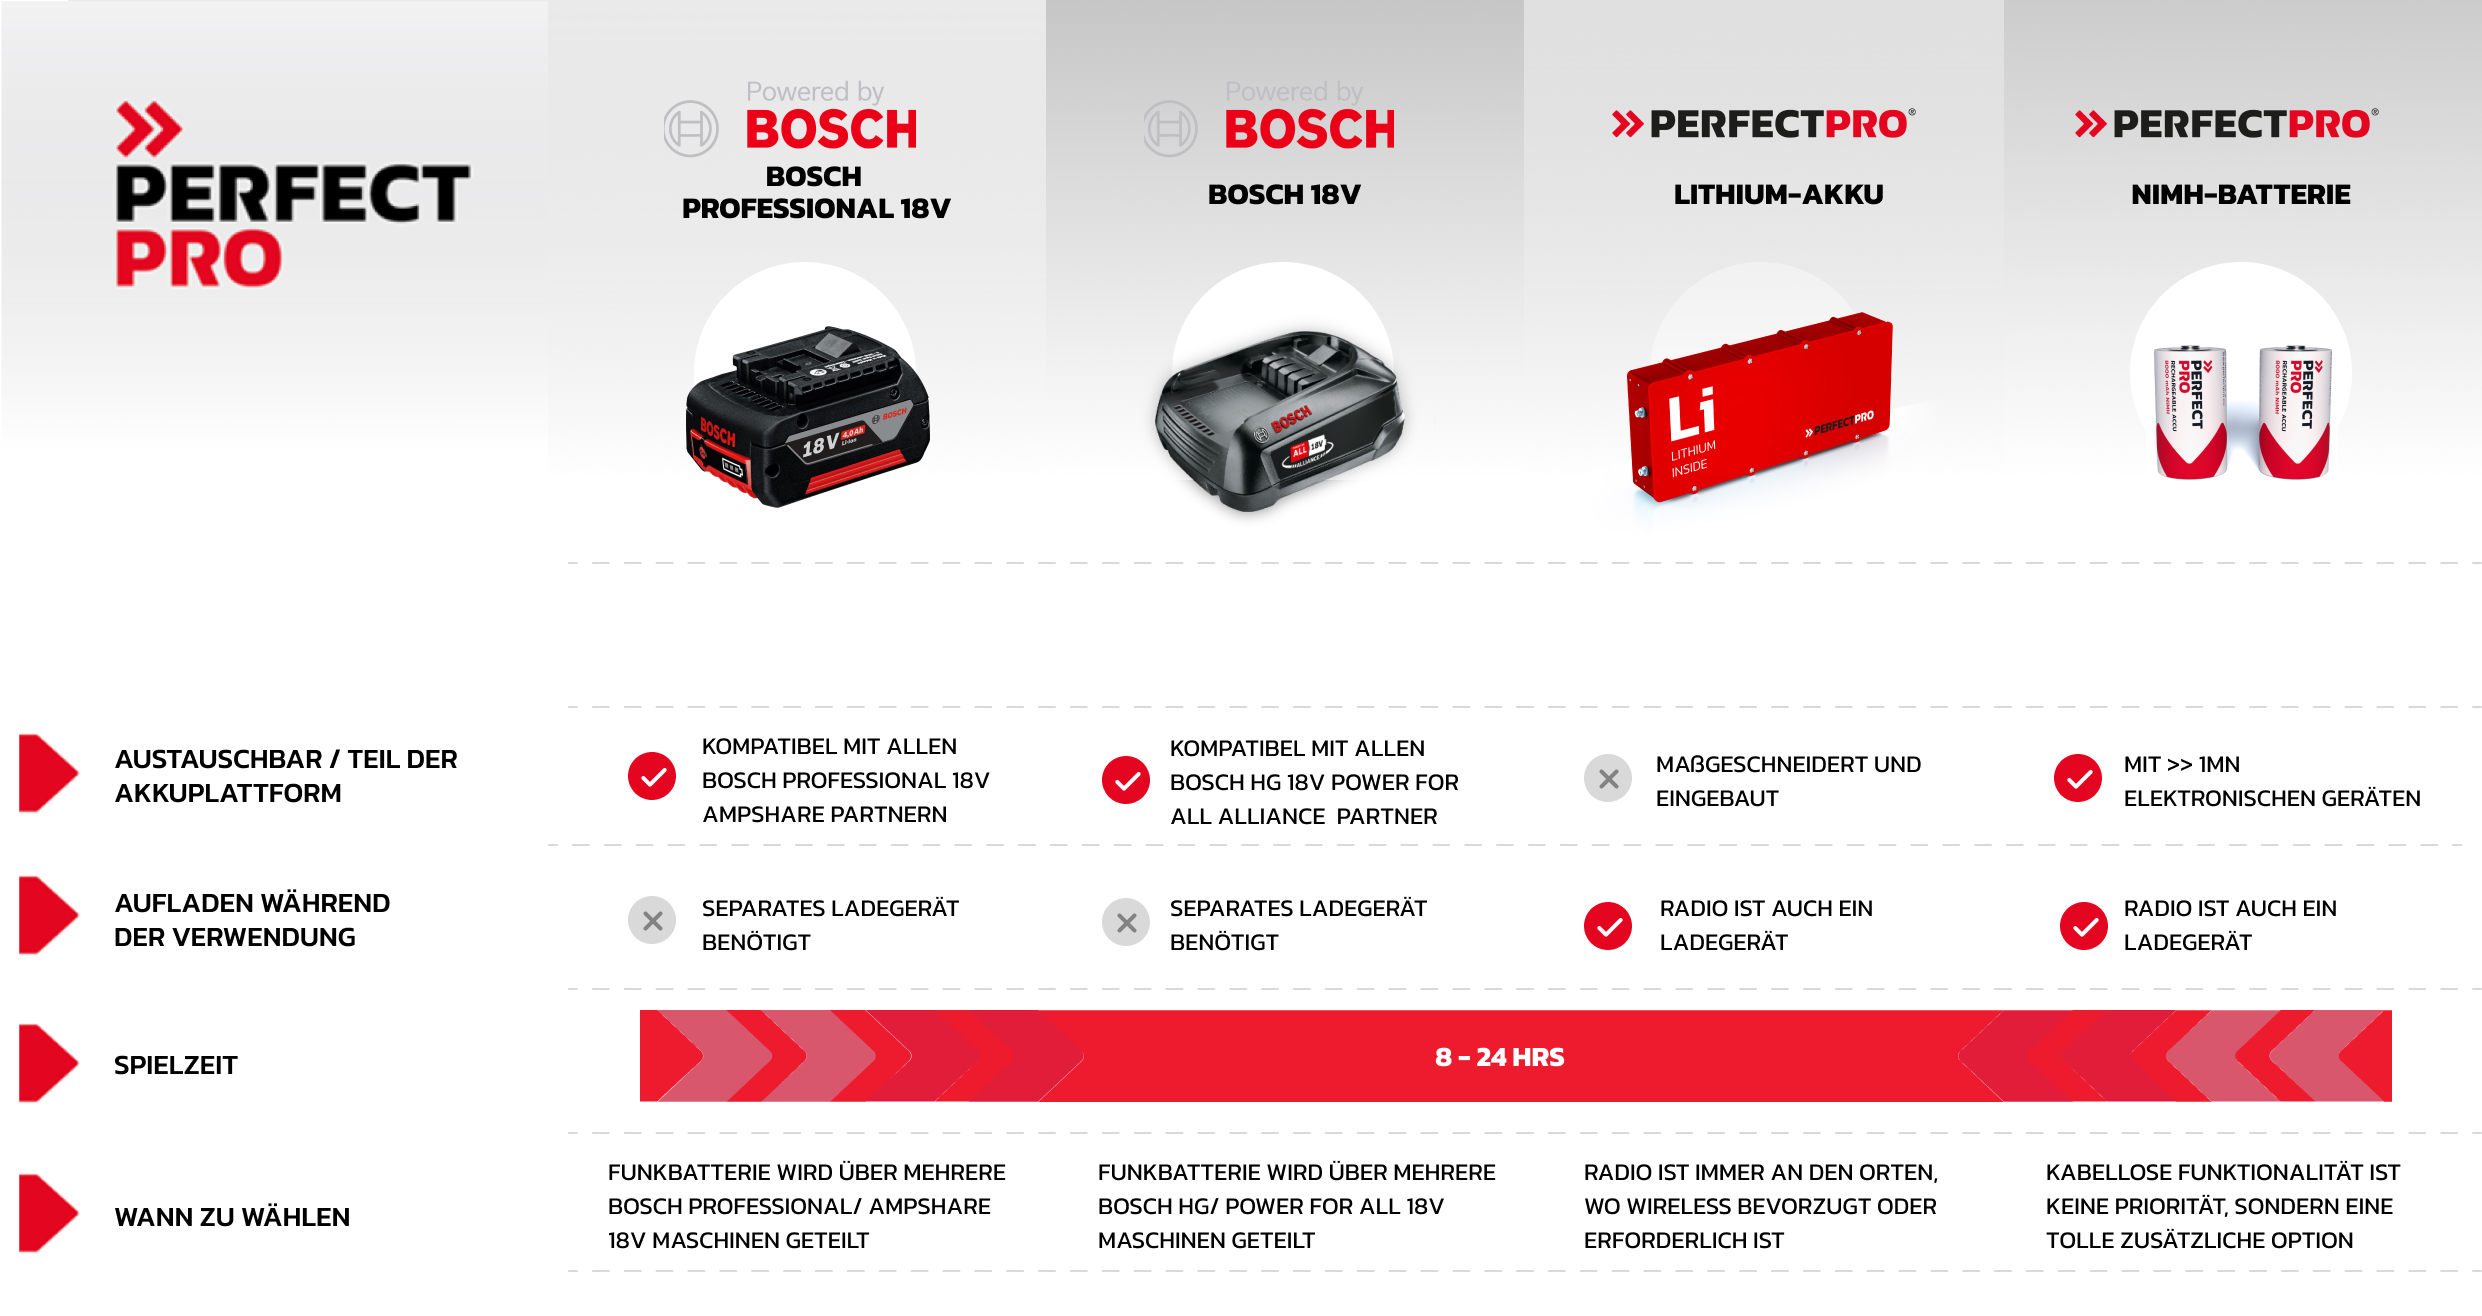 18V POWER FOR ALL Akkusystem von Bosch